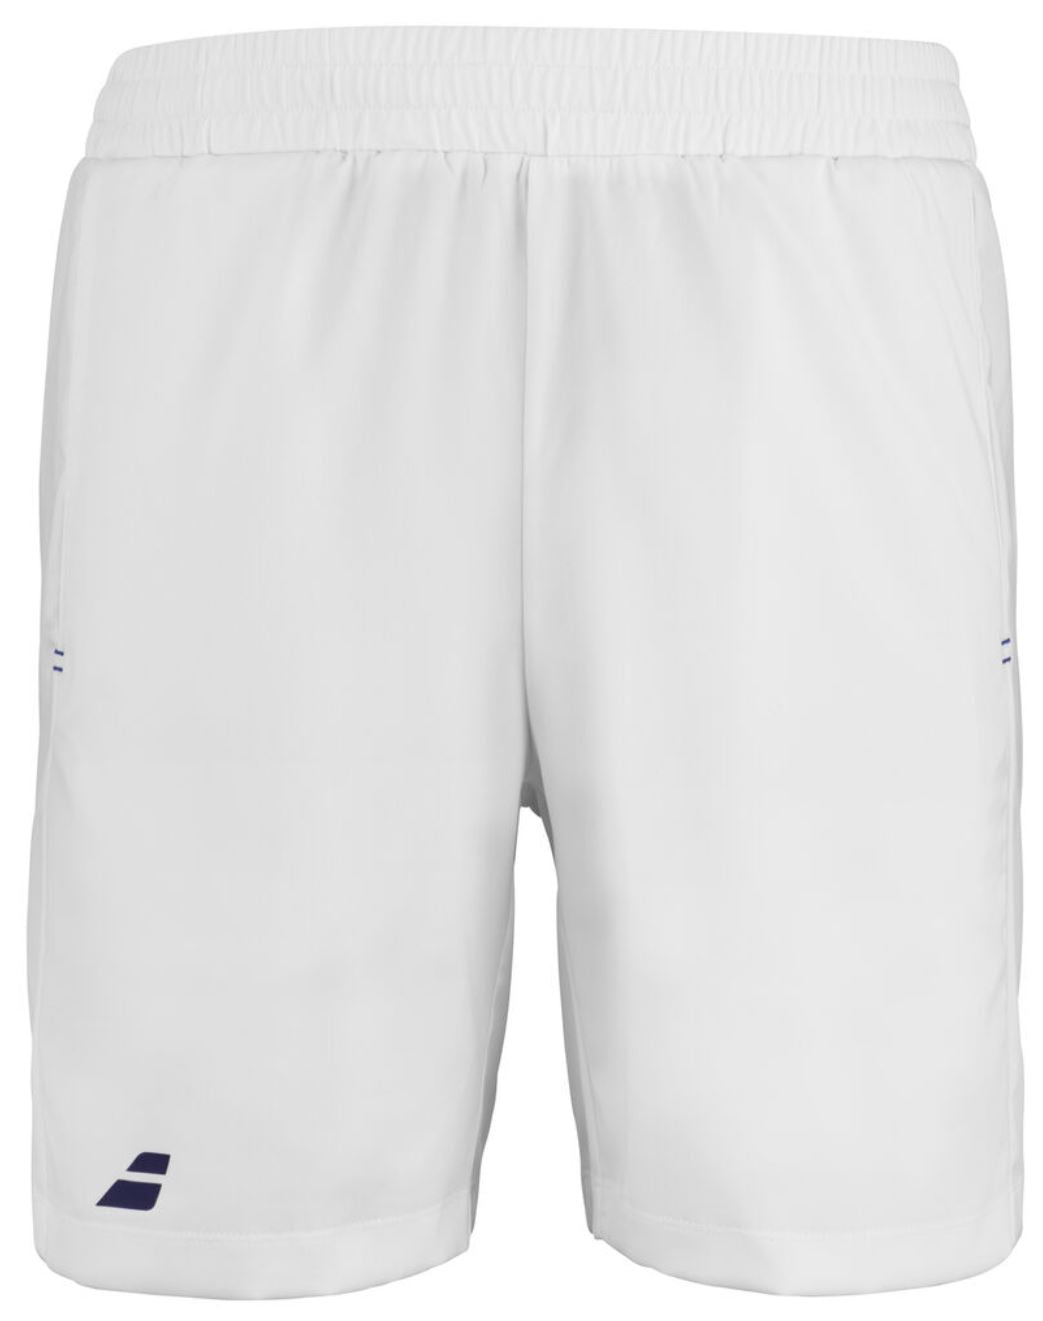 Babolat Play Shorts (Men, White)